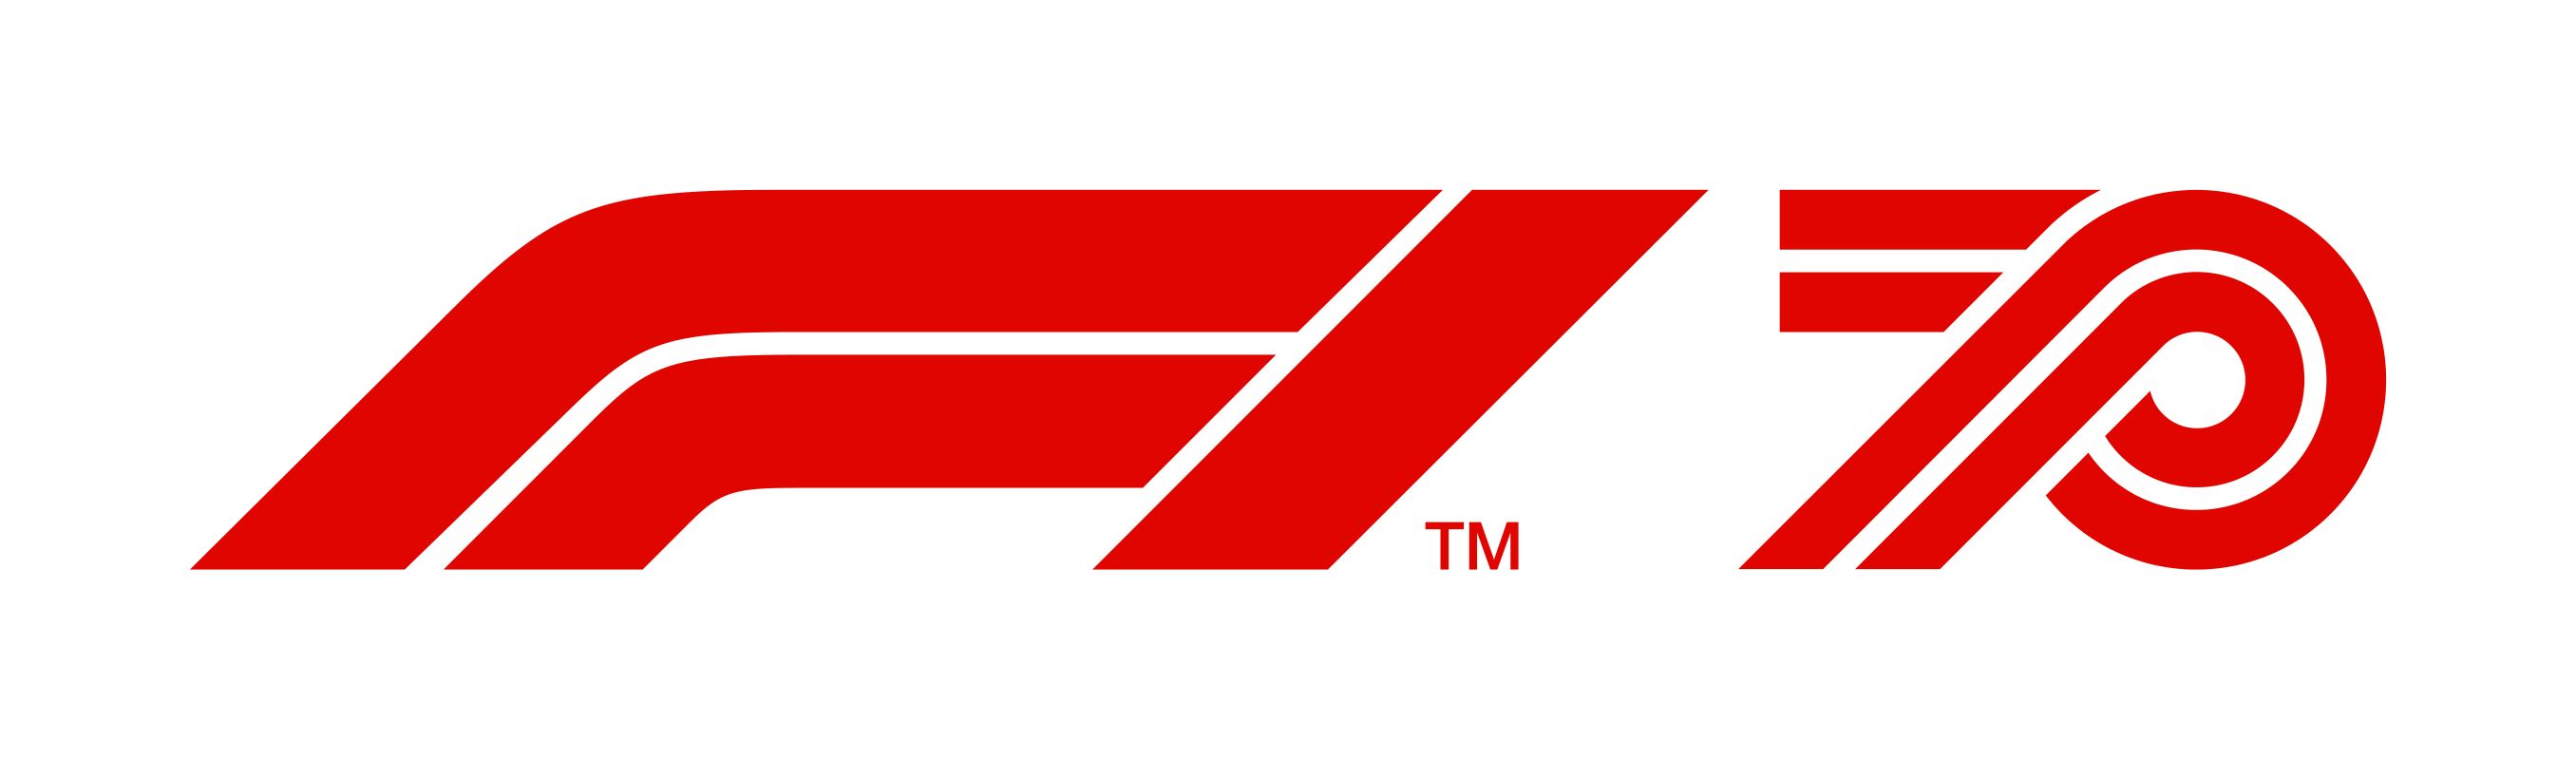 Формула 1 с ново лого